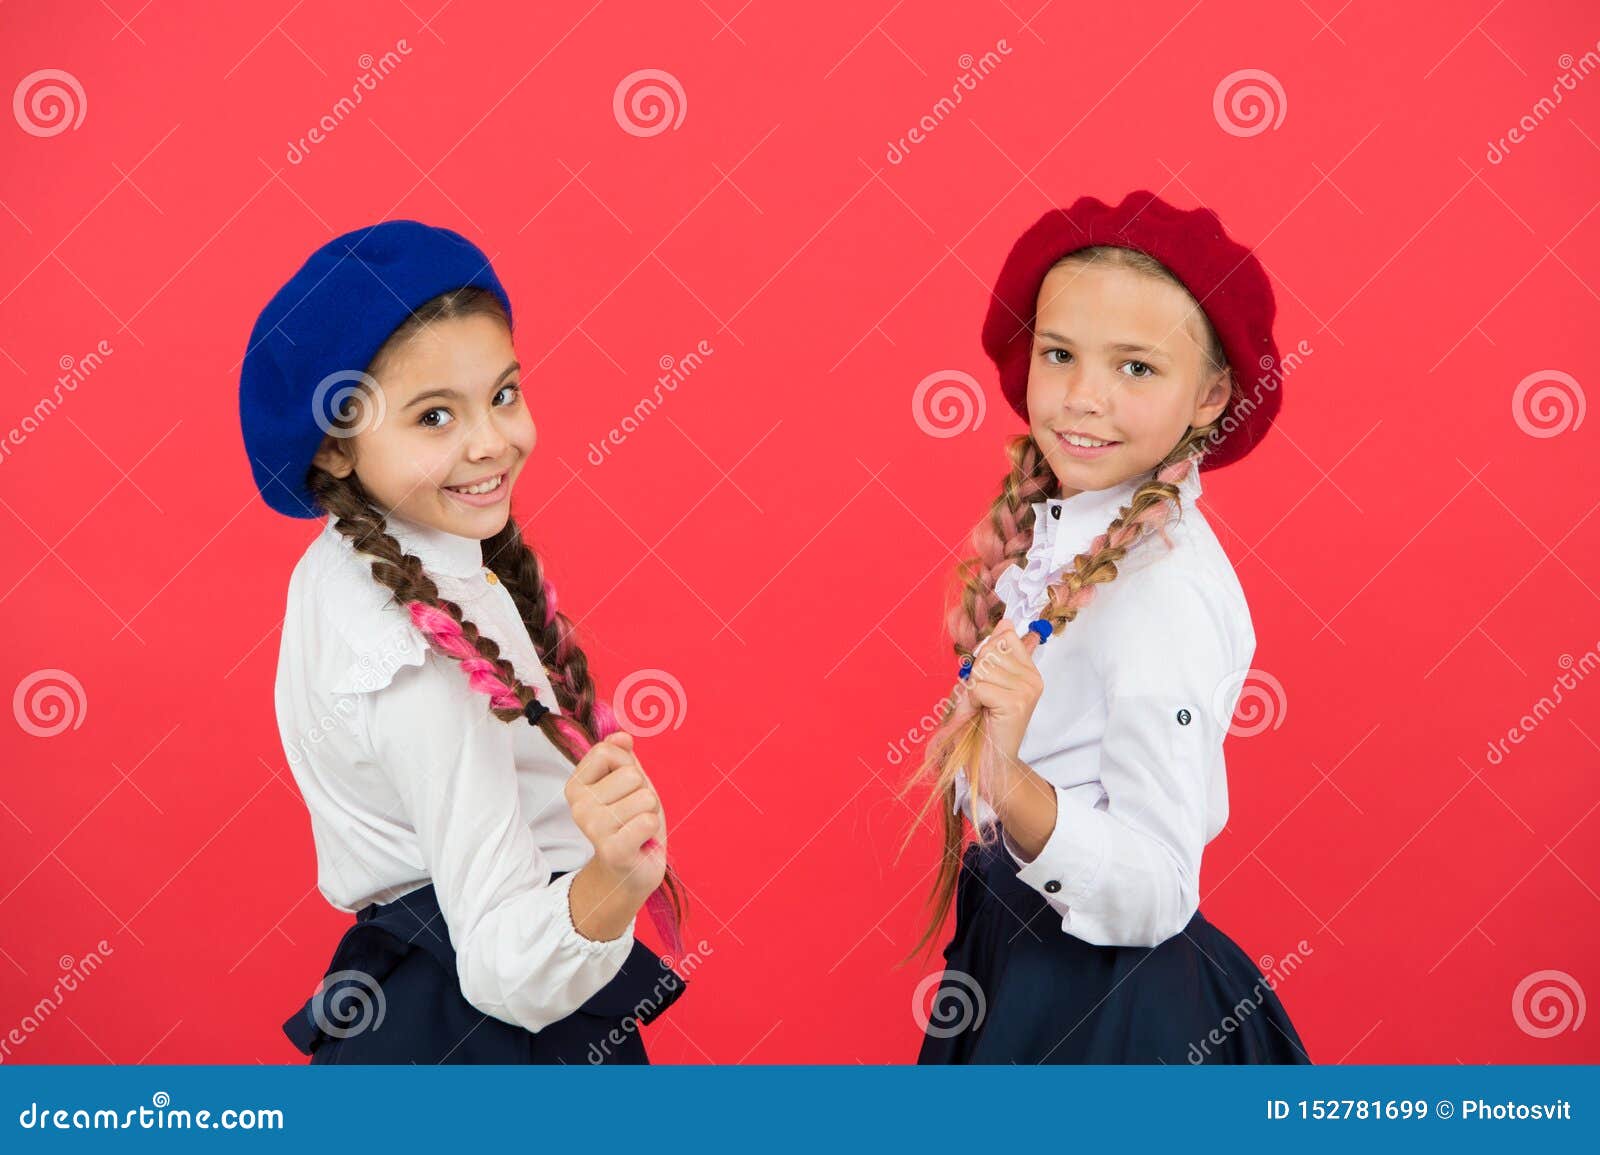 Best Friends. Schoolgirls Wear Formal School Uniform. Children Beautiful  Girls Long Braided Hair Stock Image - Image of education, children:  152781699